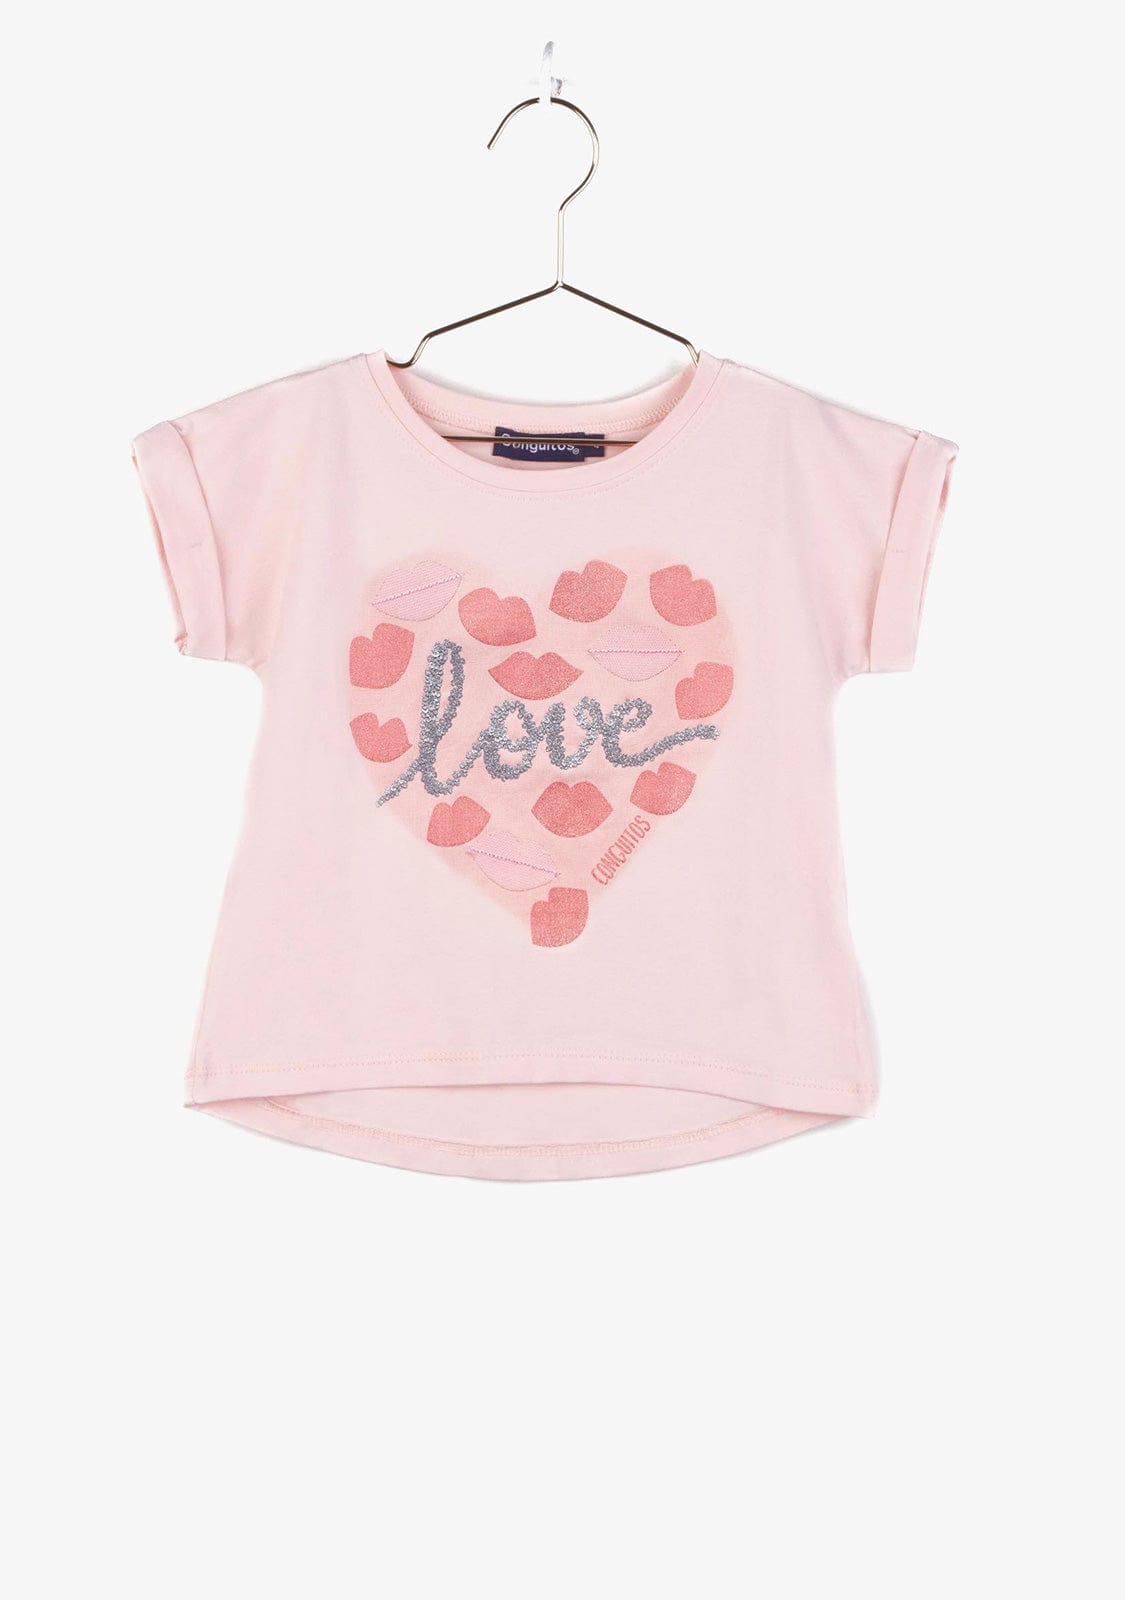 CONGUITOS TEXTIL Clothing Girl's "Love Kiss" Pink T-Shirt